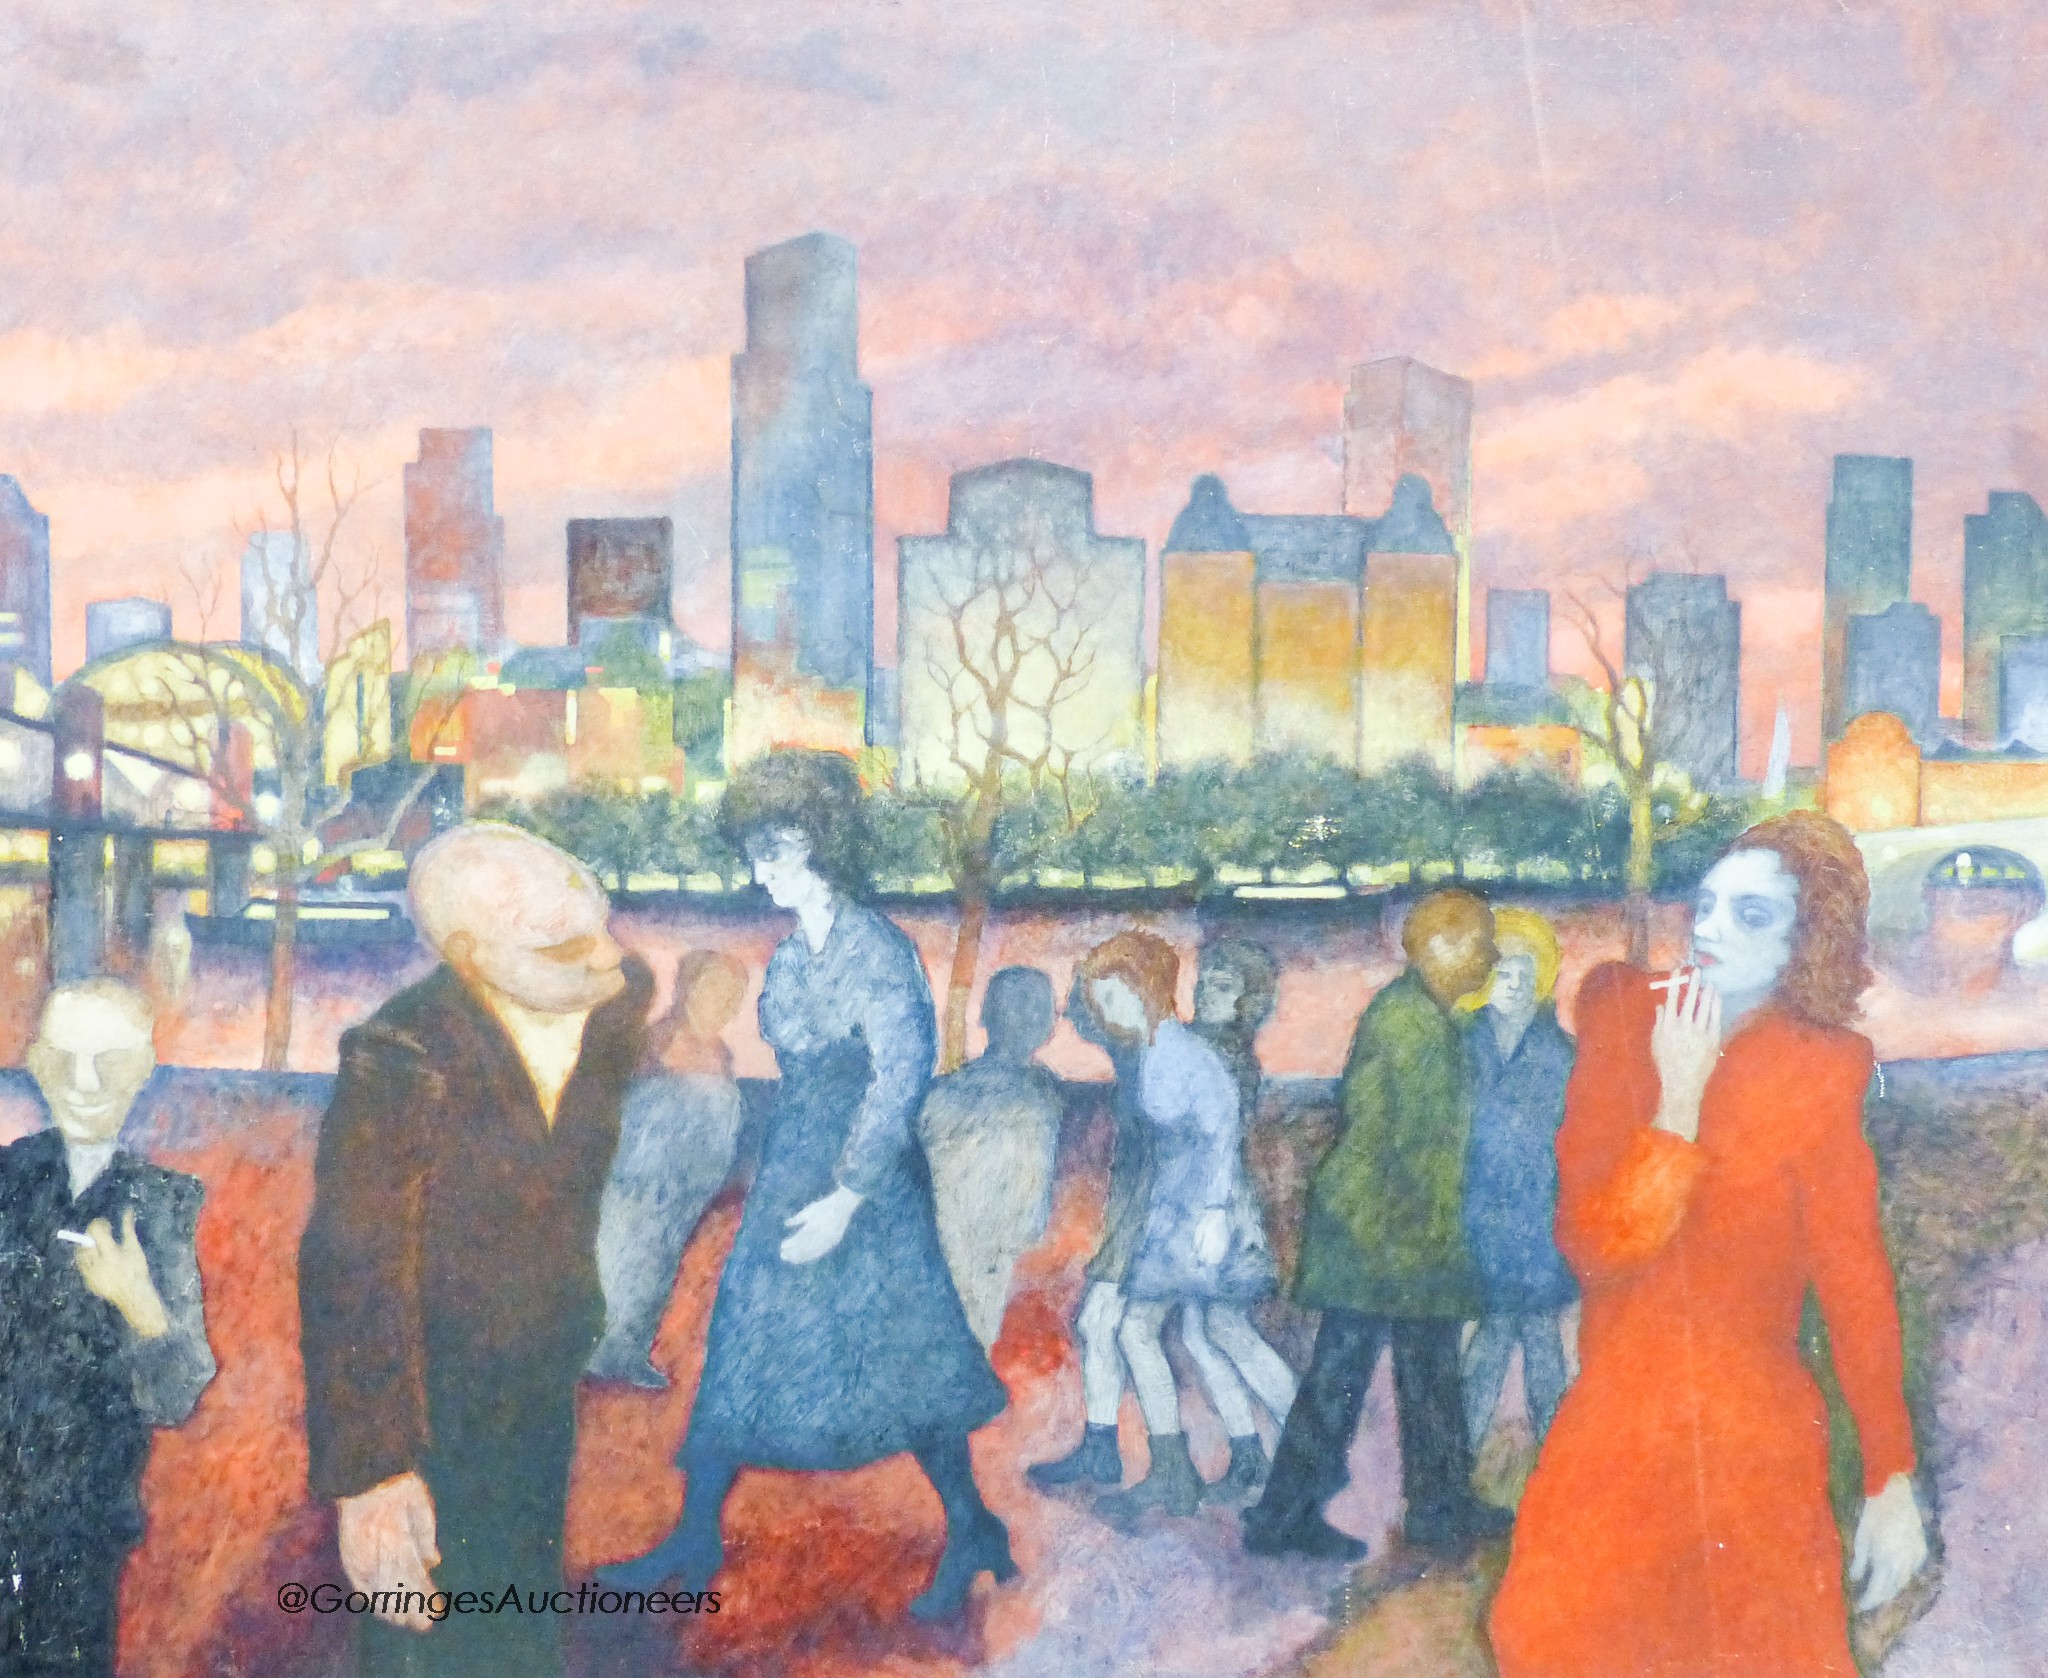 Gerald, R Jarman, British (1930-2014) unframed oil on canvas, Figures in a city landscape, 165 x 140cm